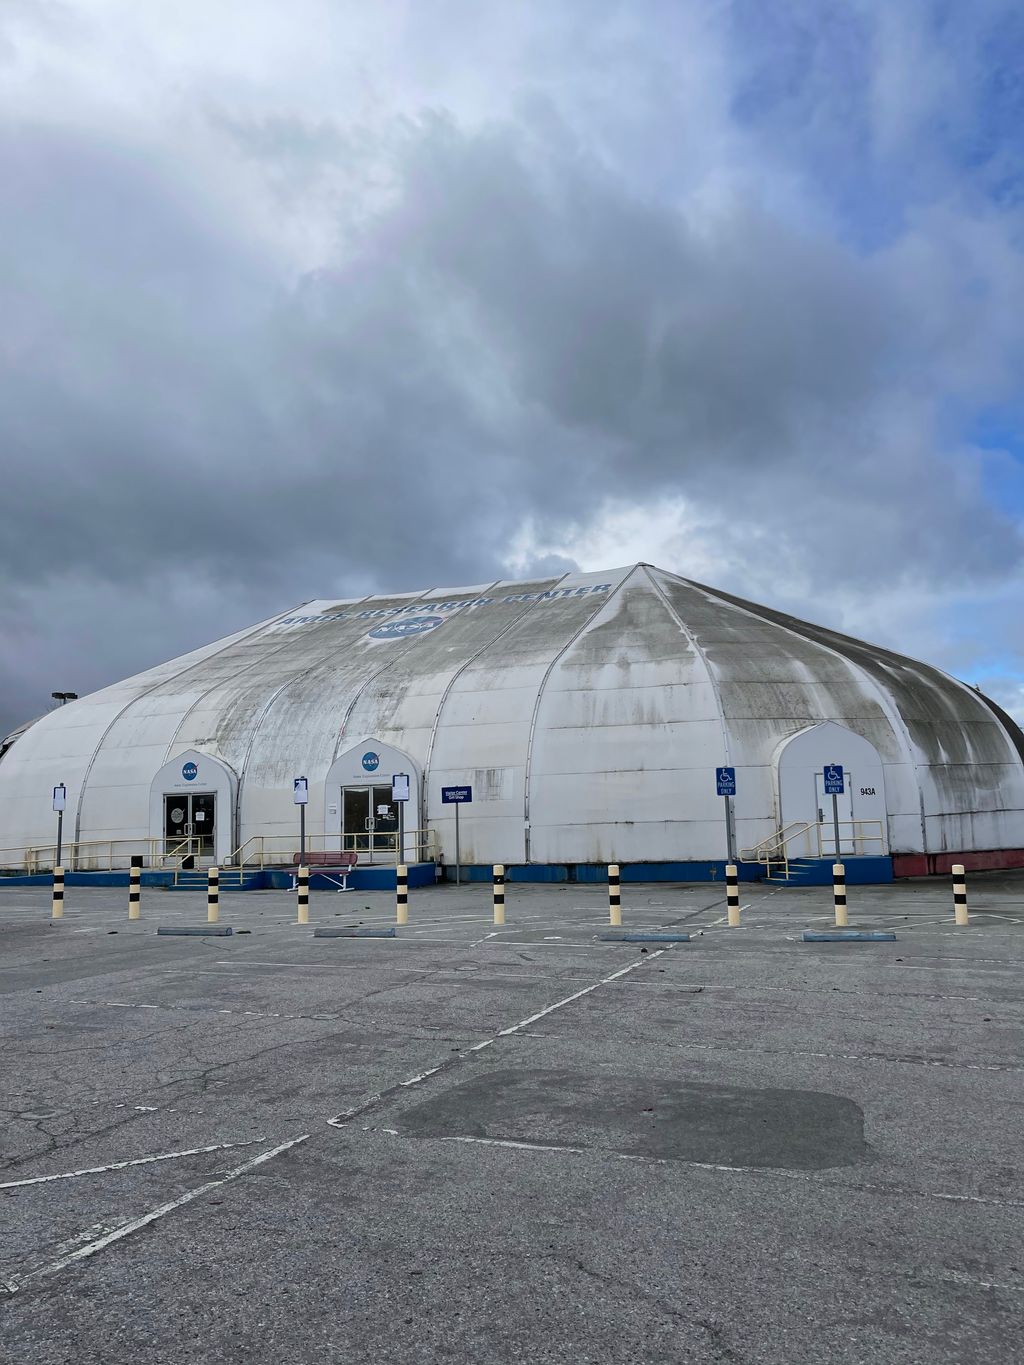 NASA Ames Visitor Center